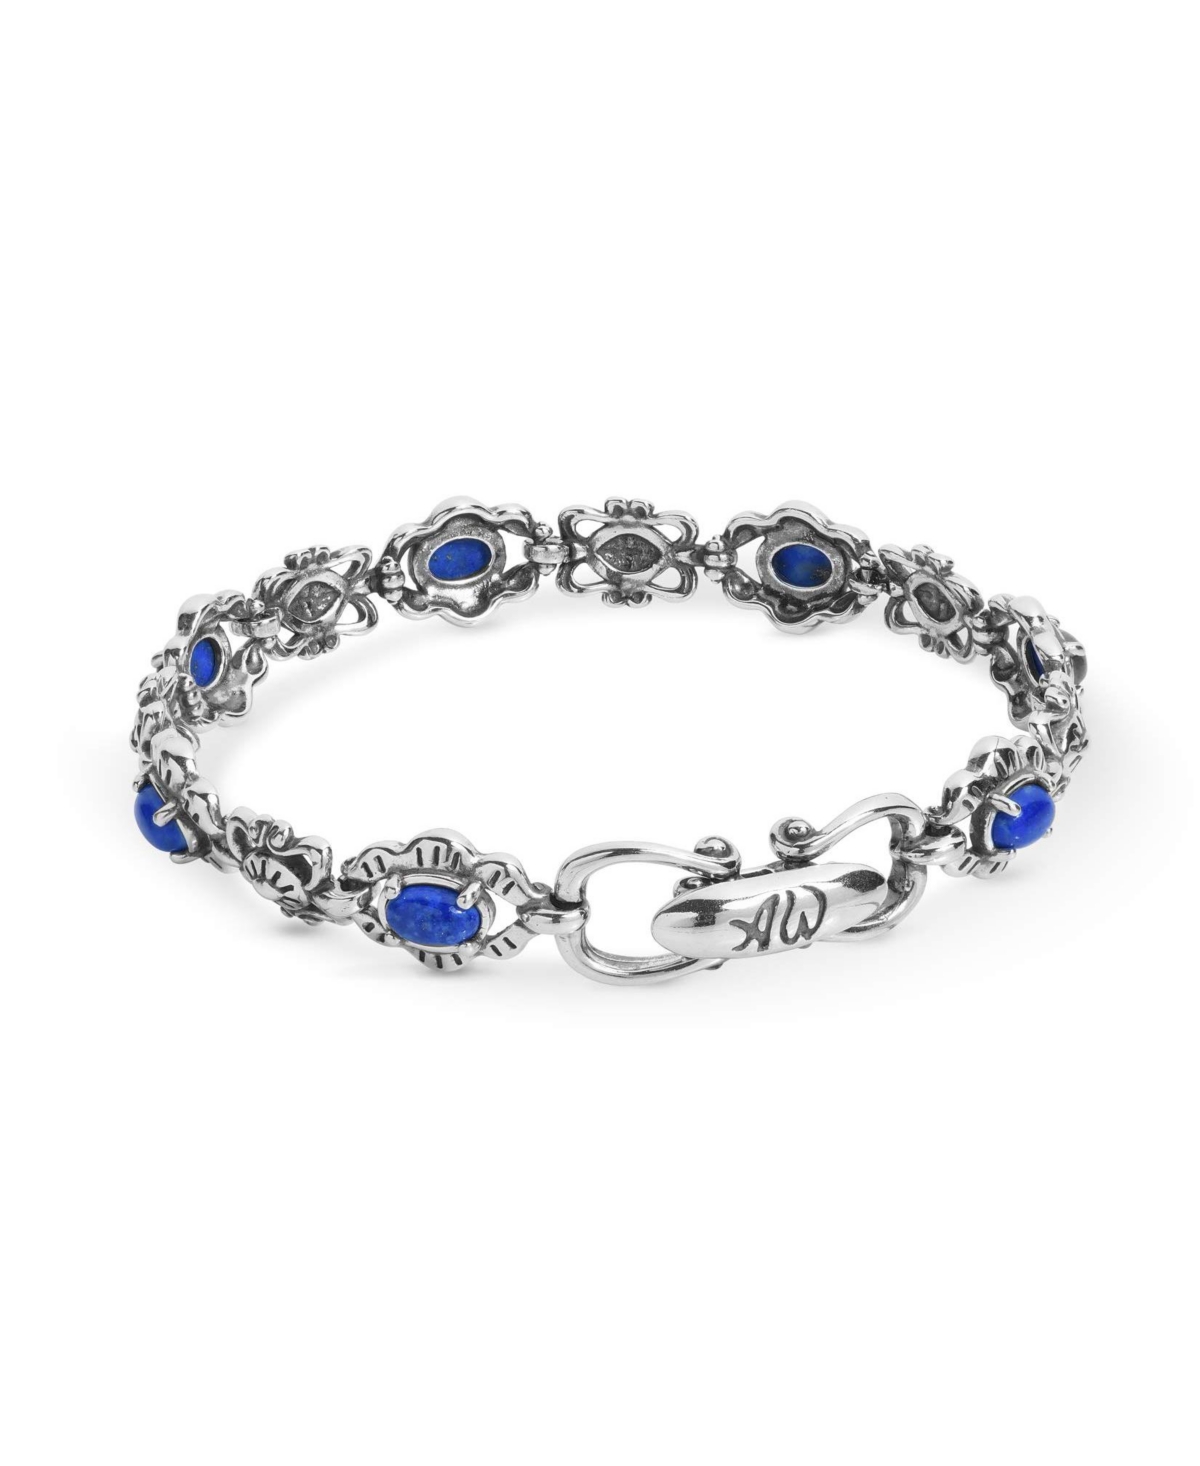 Sterling Silver Women's Link Bracelet Oval Blue Denim Lapis Gemstone Size Small - Large - Blue denim lapis